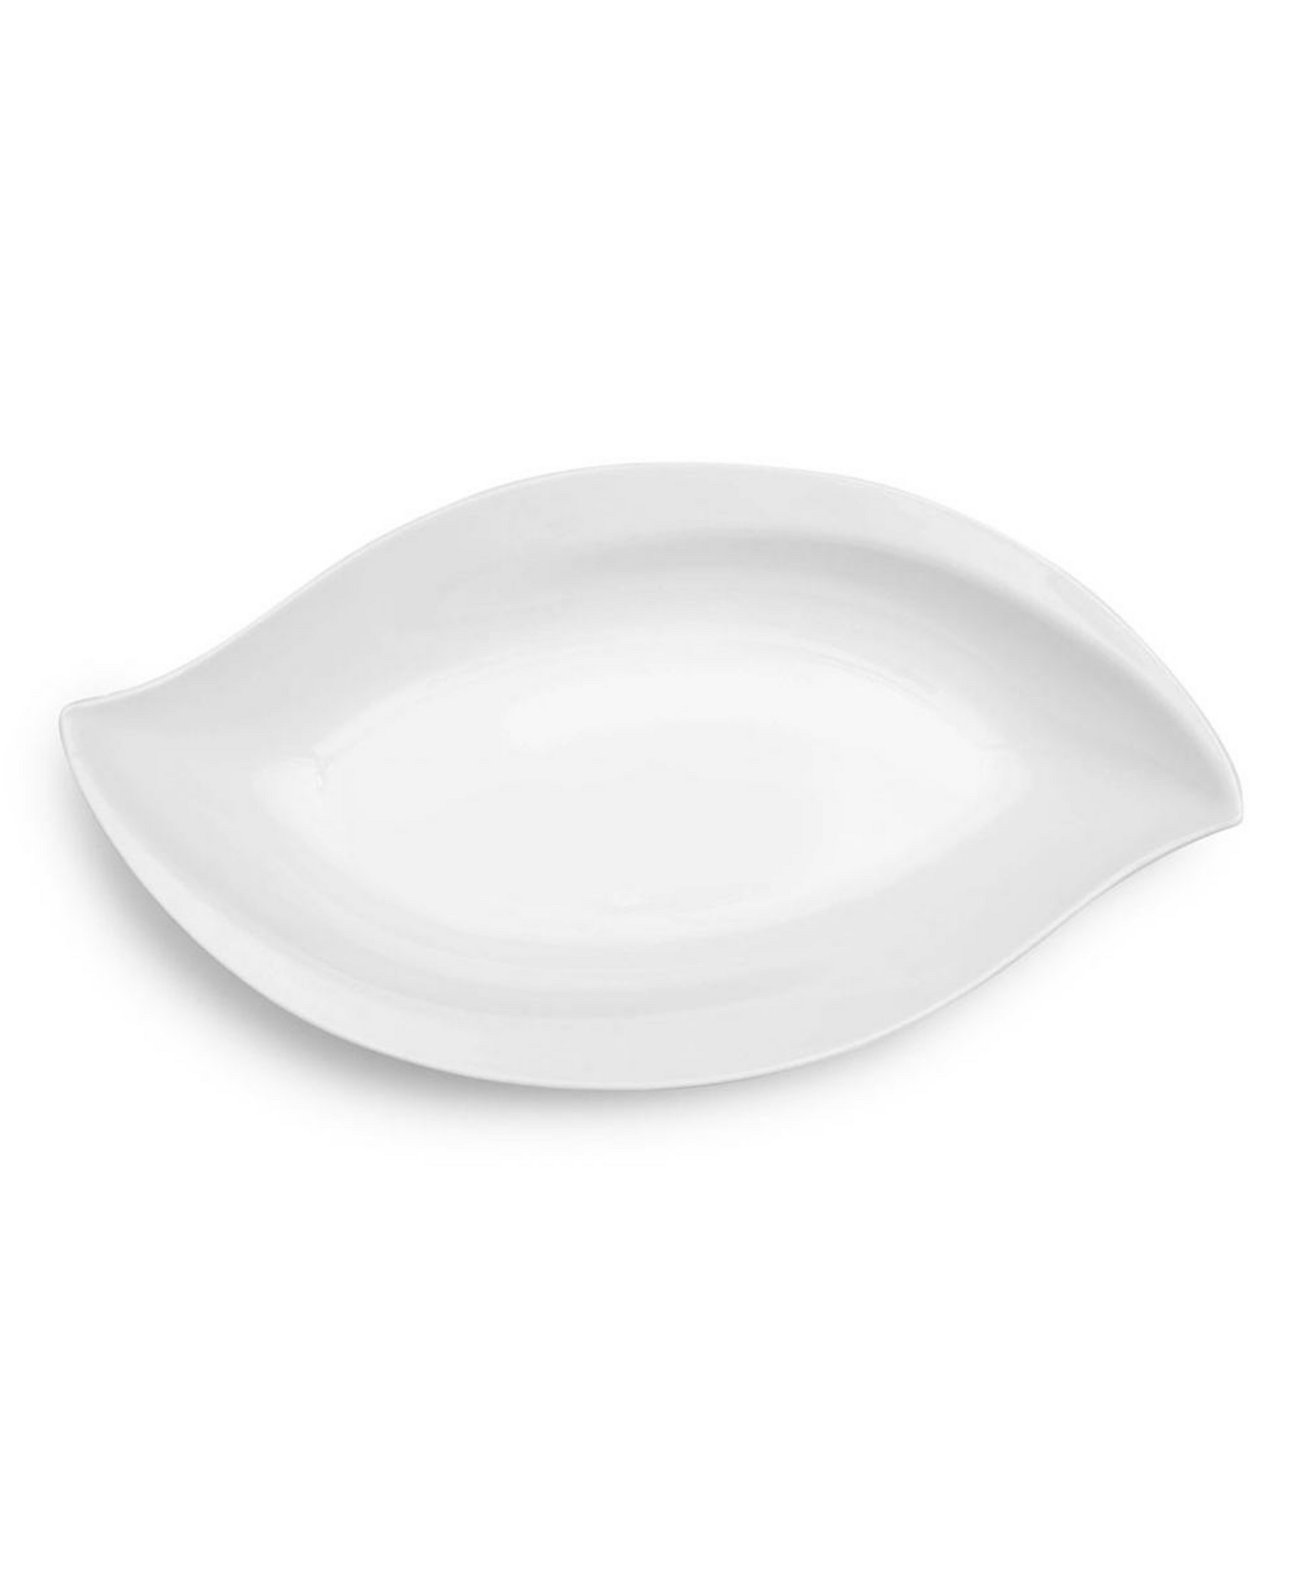 Лепестковая сервировочная тарелка 20,5 дюйма Q Squared